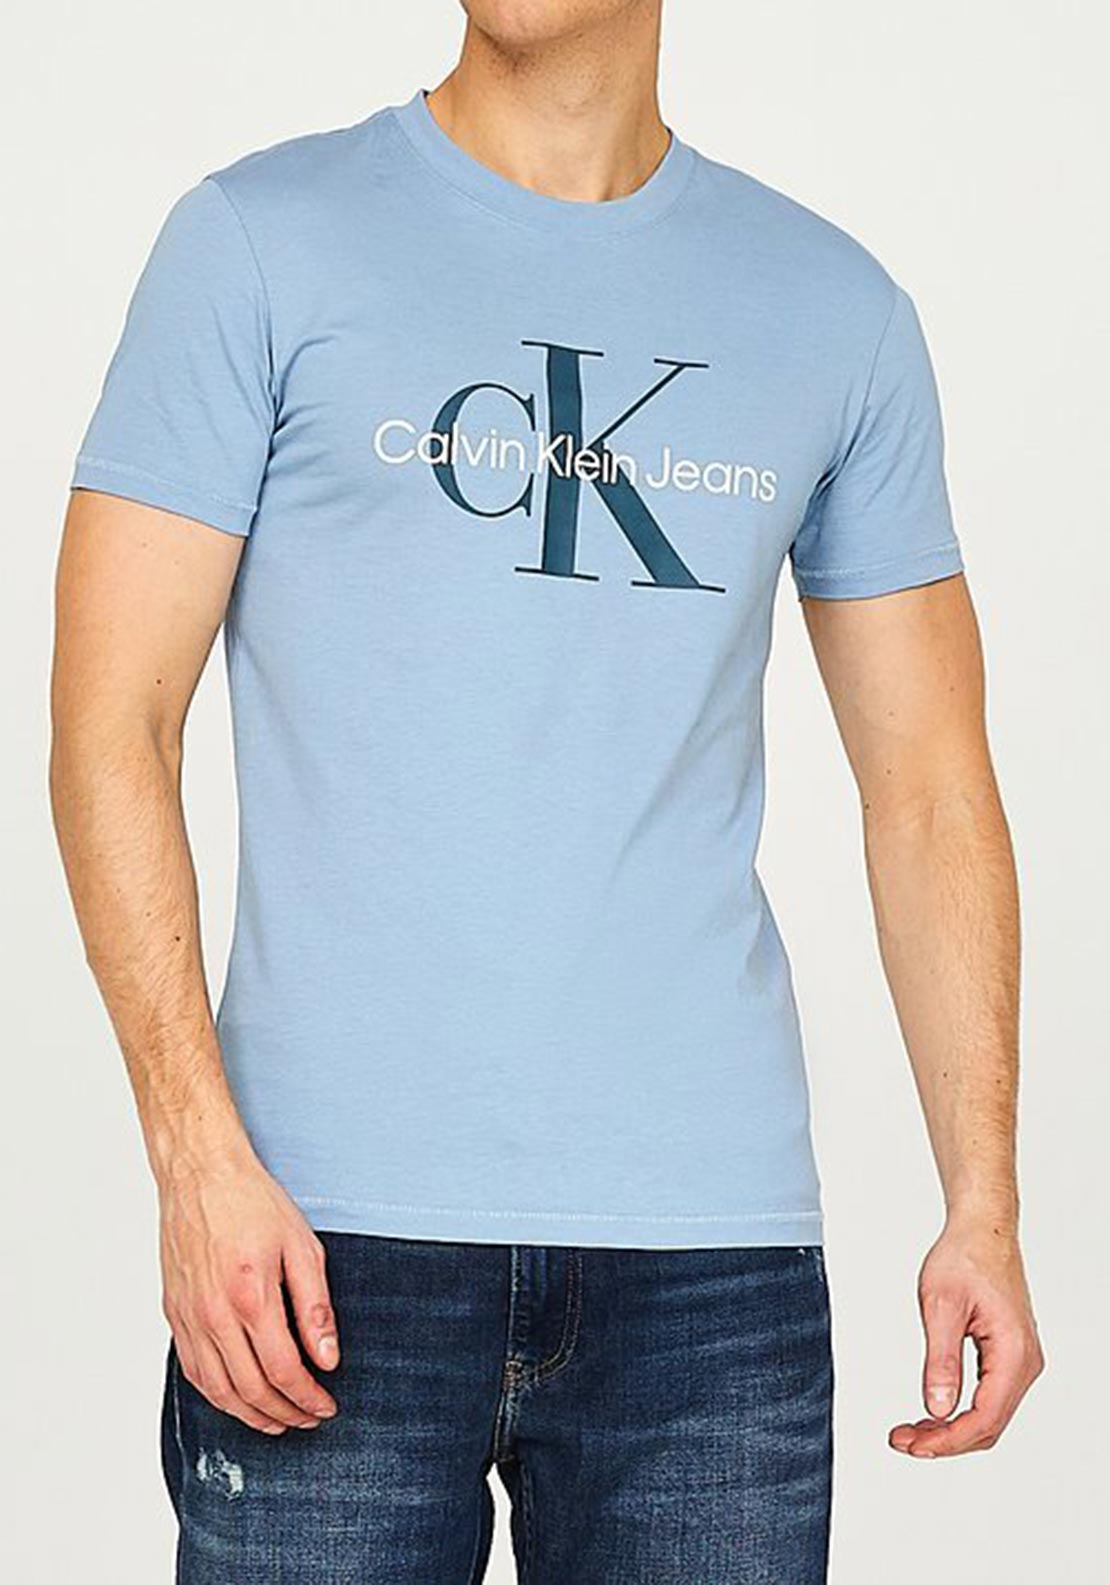 Calvin Klein Jeans Monogram T-Shirt, Iceland Blue - McElhinneys